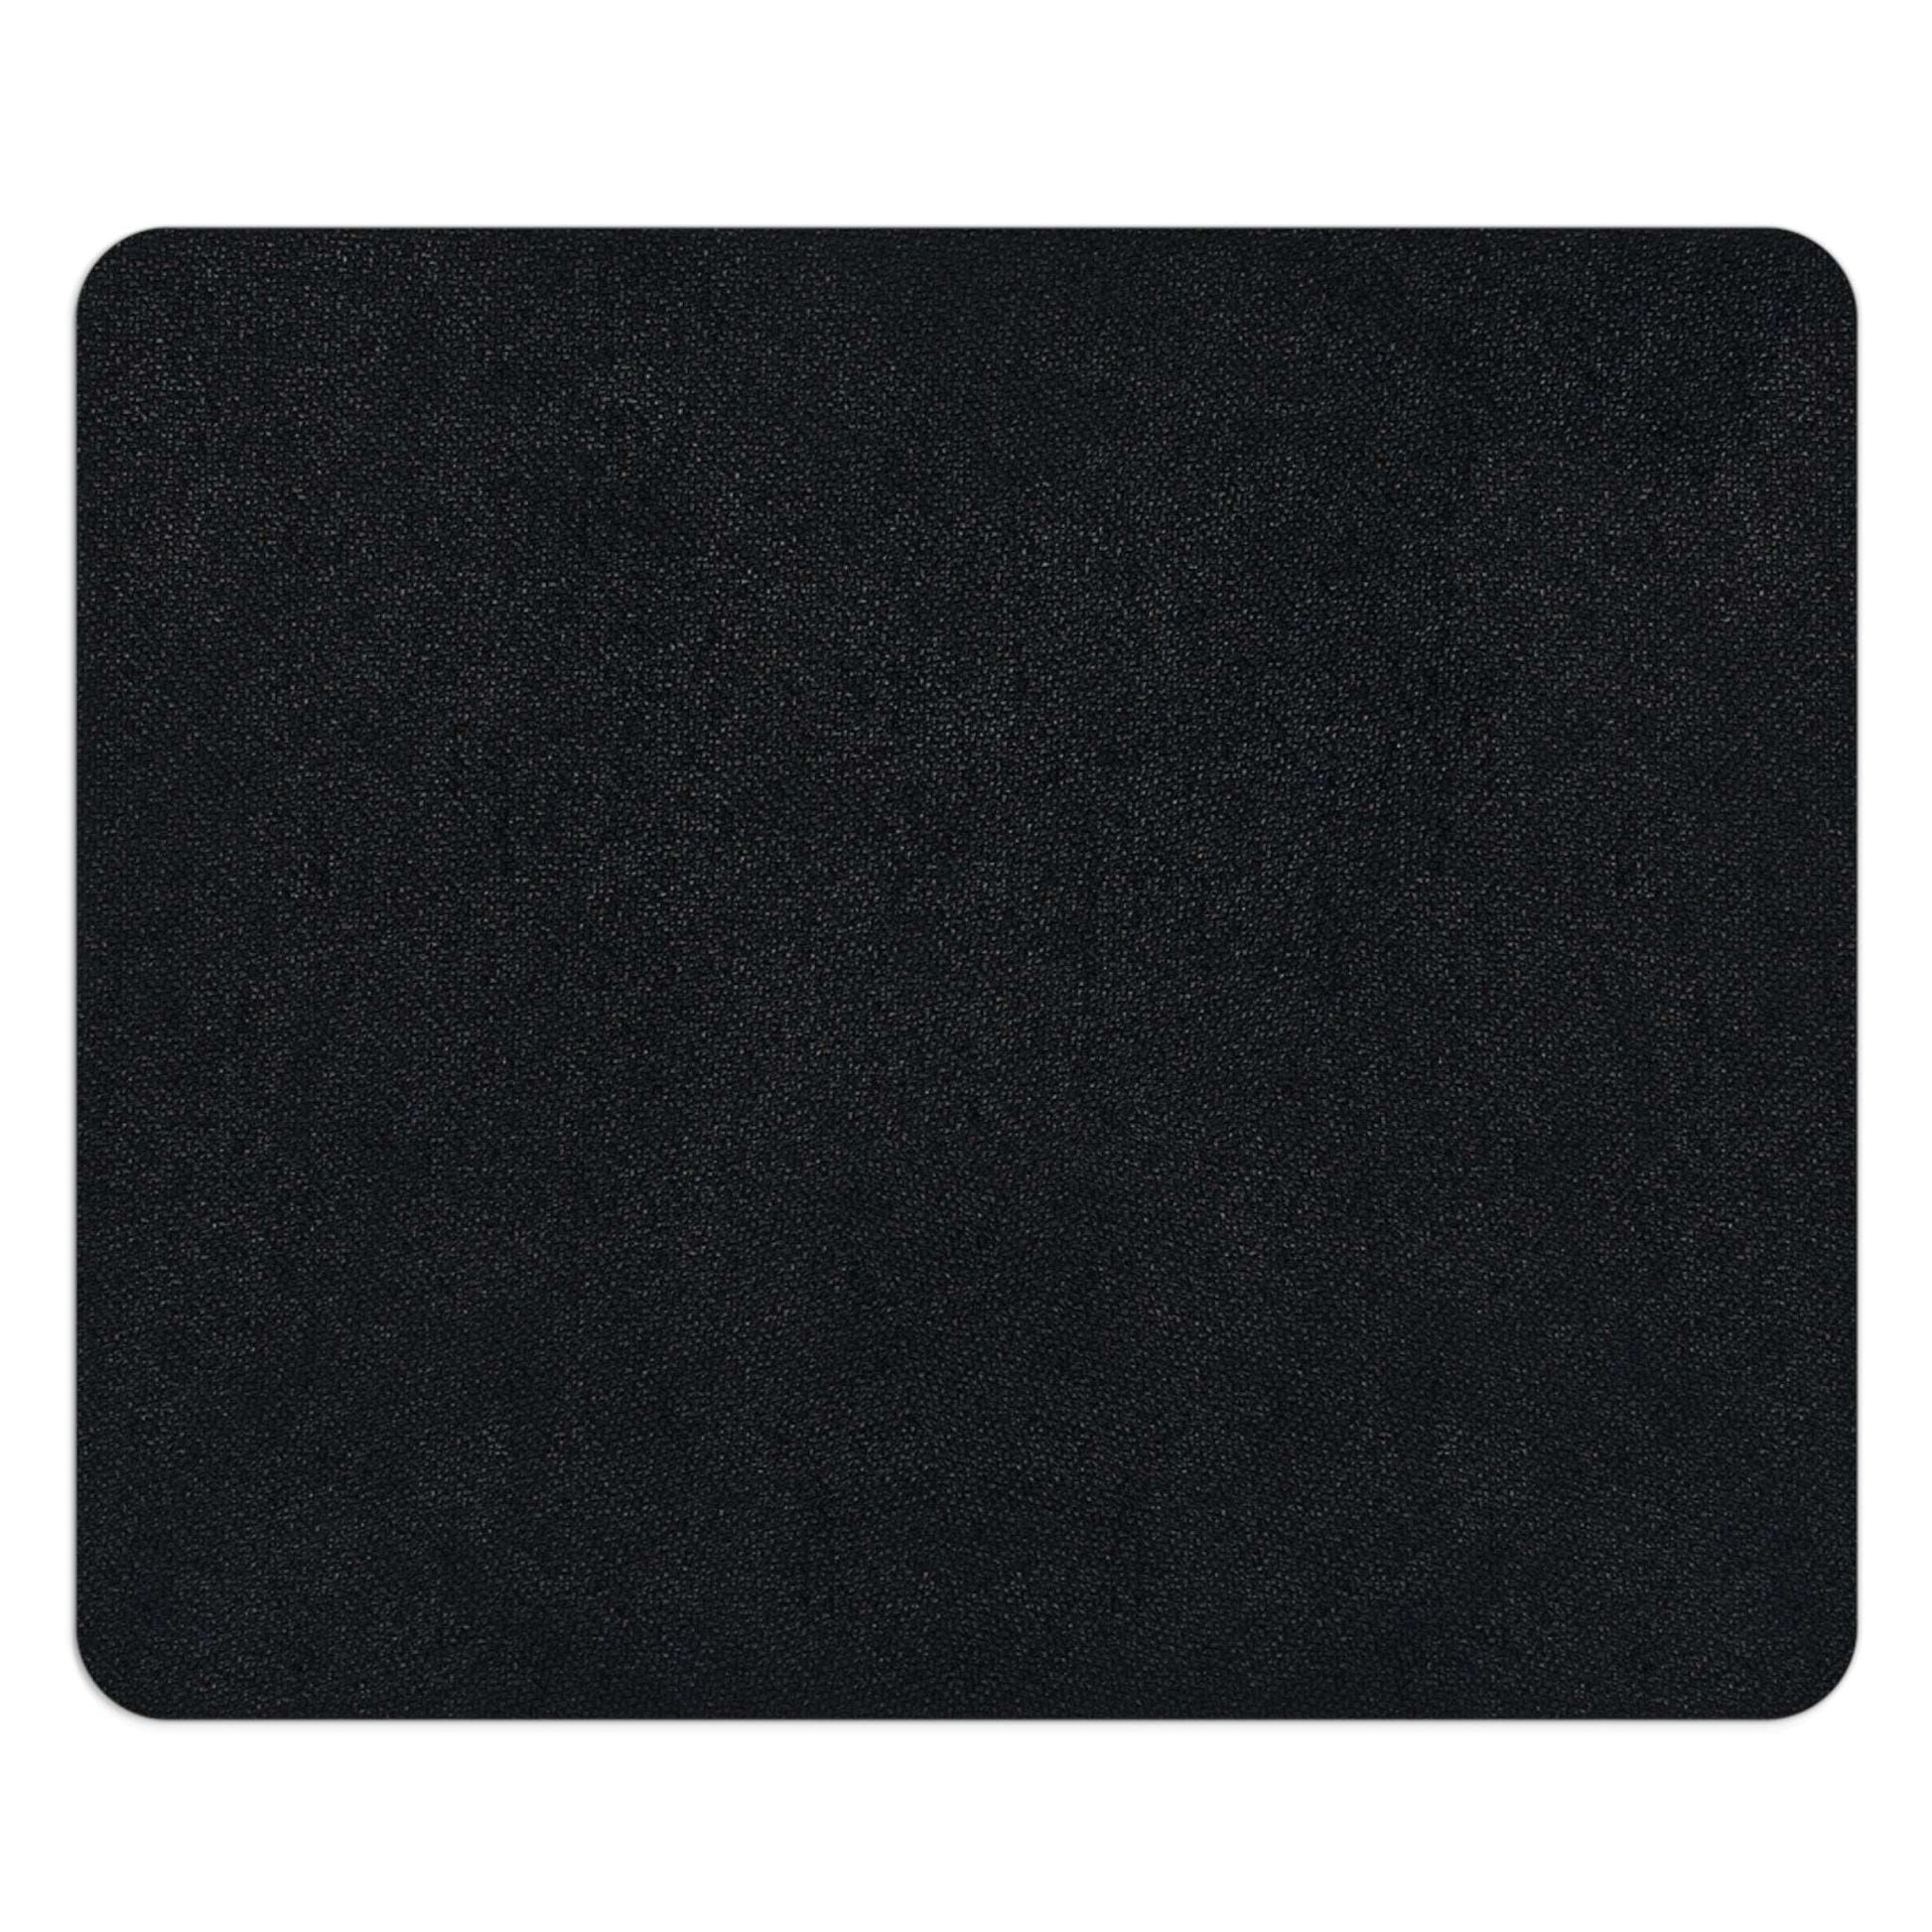 Computer Mouse Pad, Non-slip rubber bottom, Black Cat w Flowers